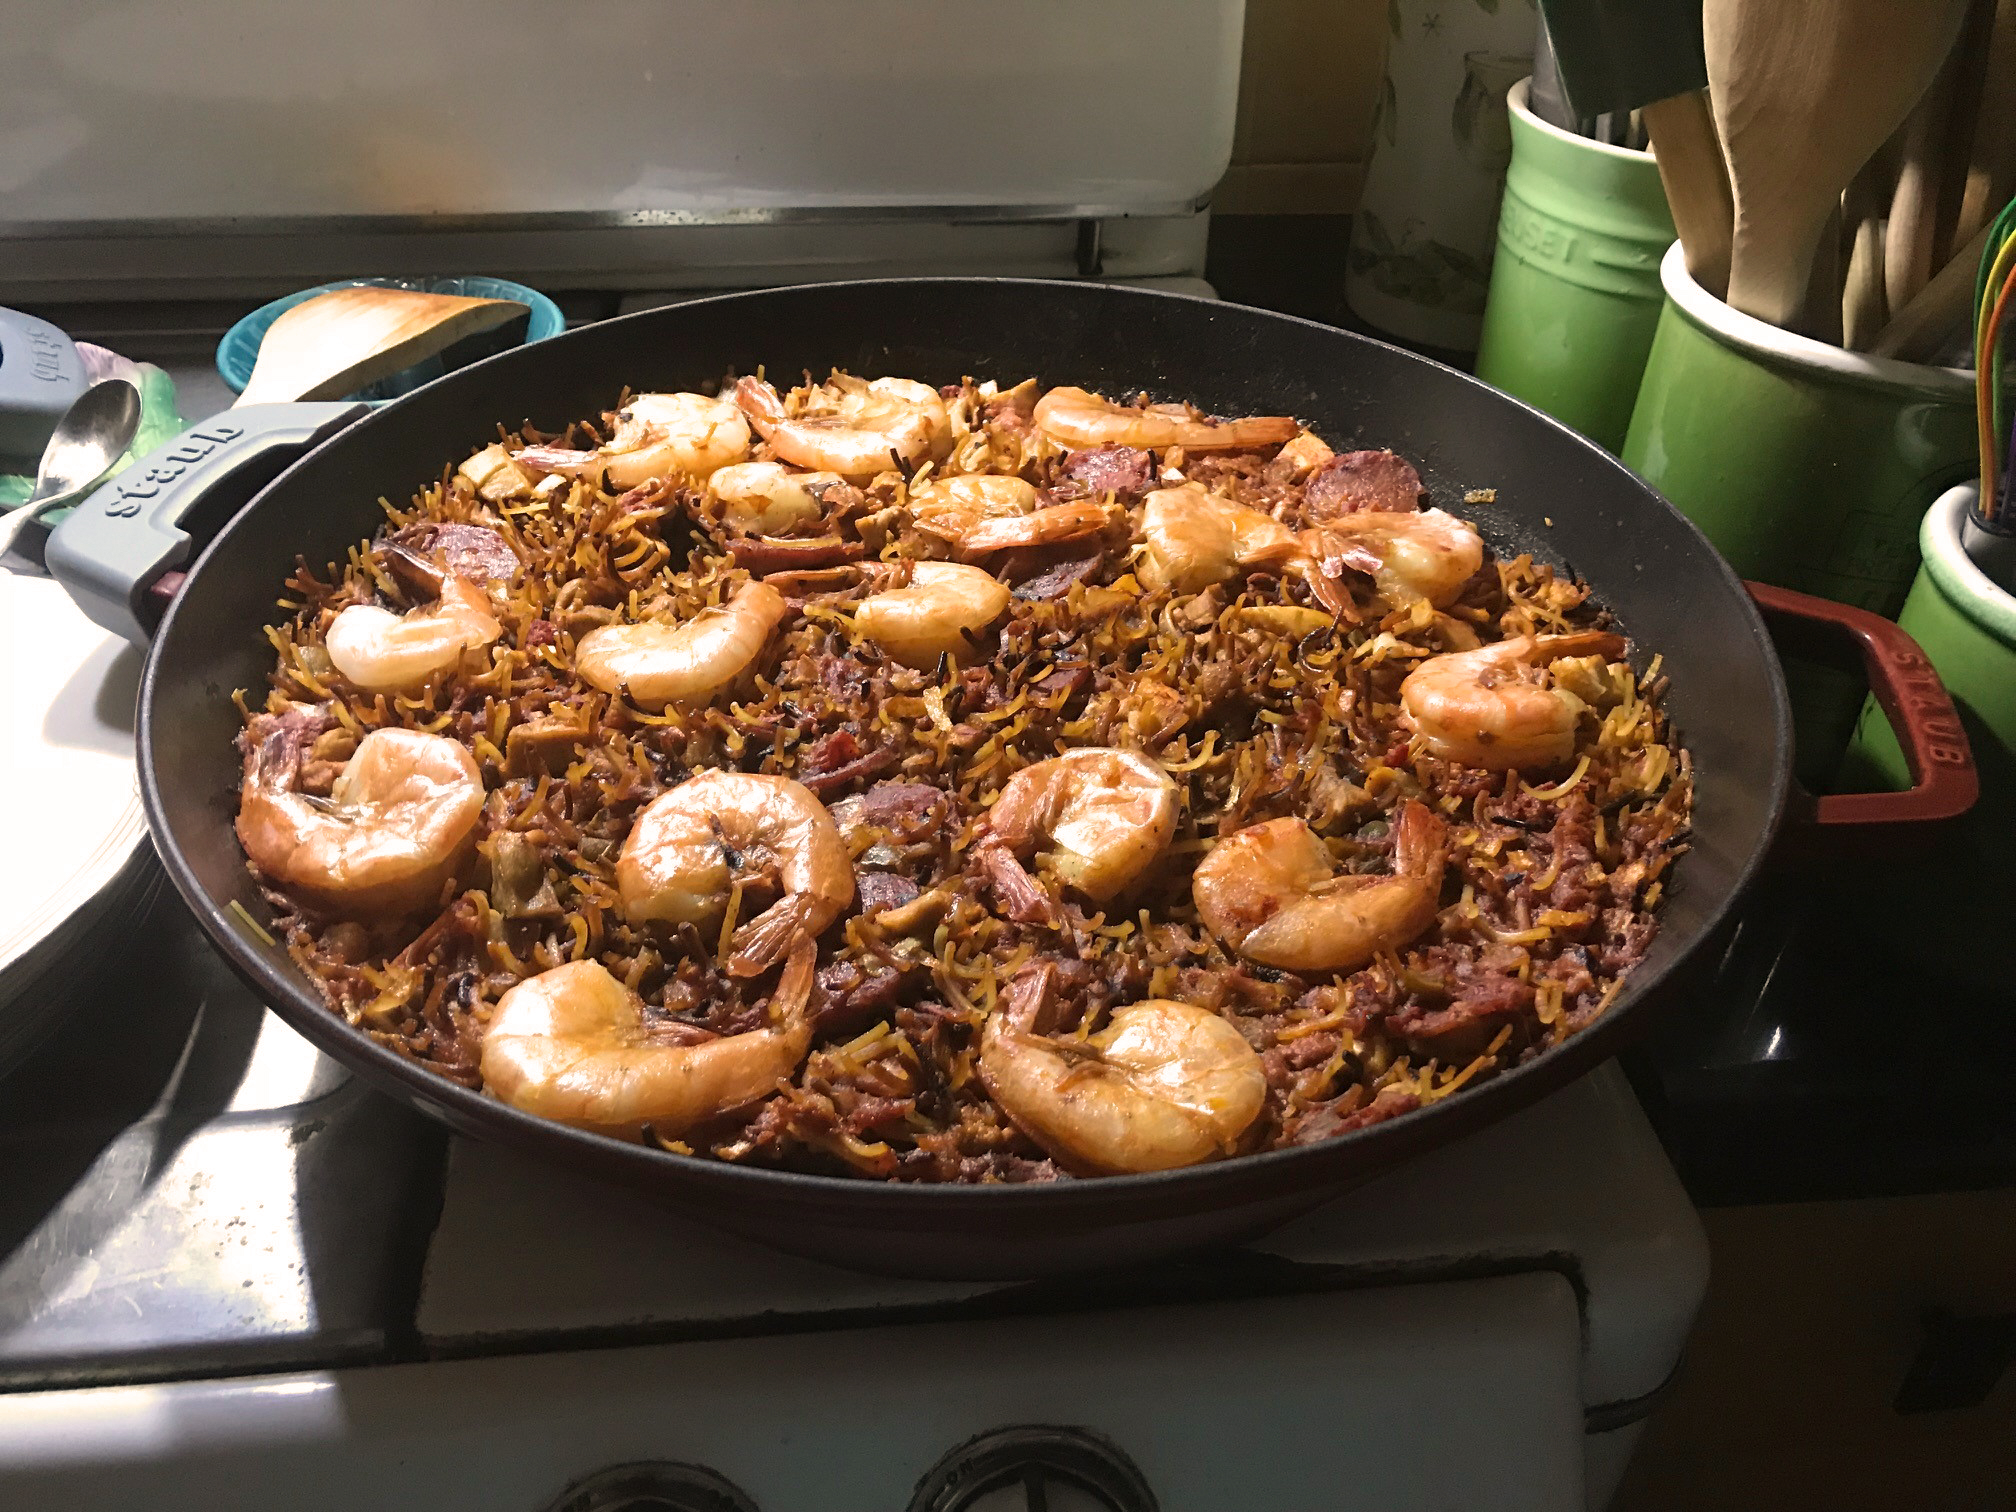 Traditional Valencian Fideua - Recipe Step by Step - Valencian Foodie Blog